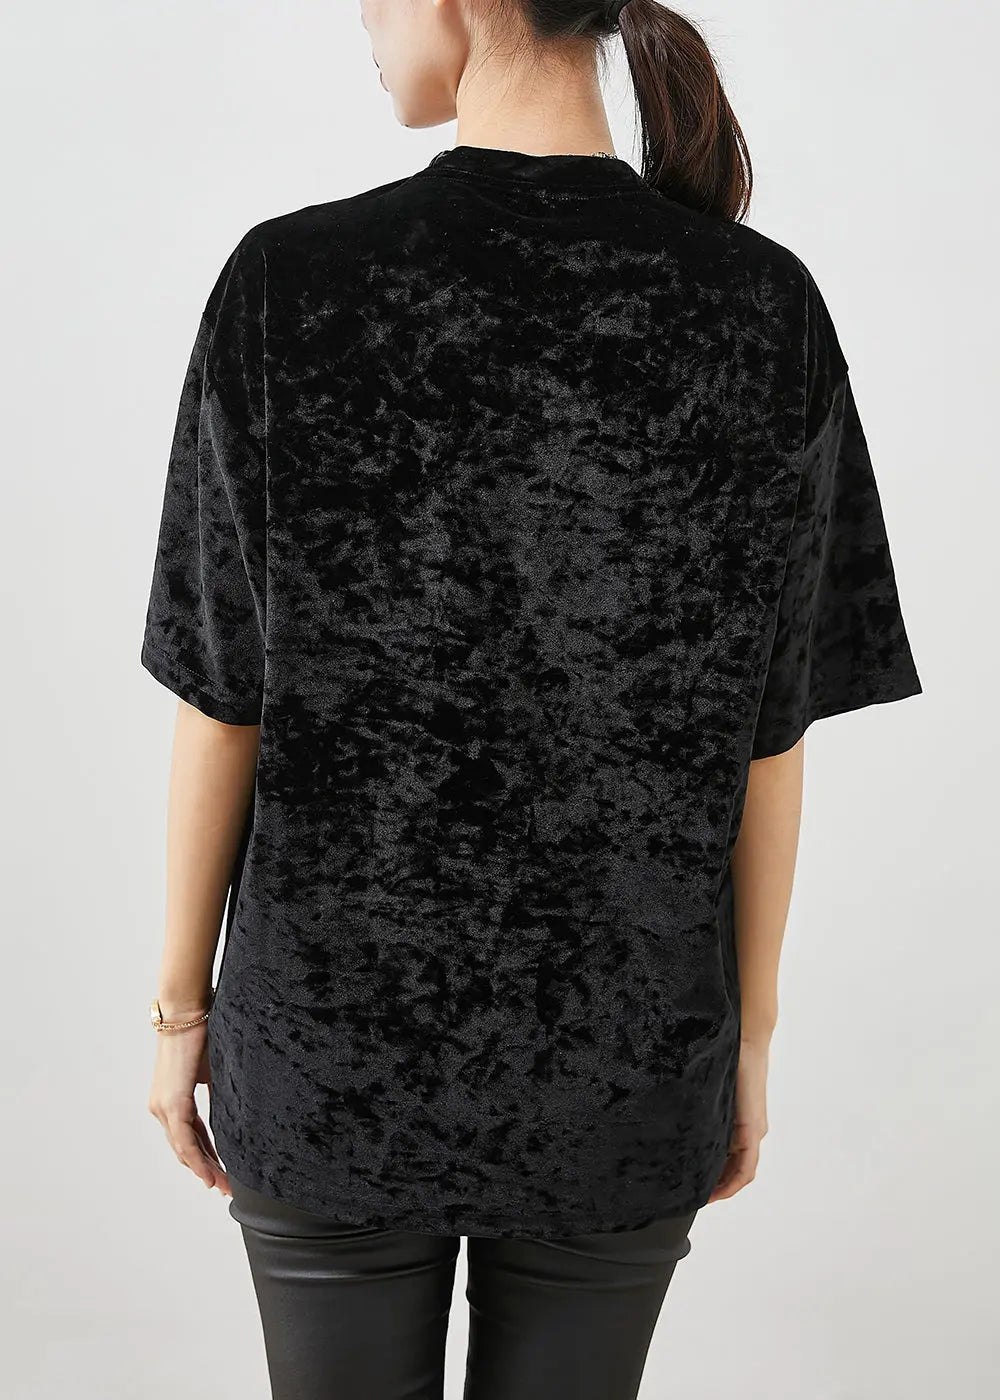 Classy Black Oversized Print Silk Velour Sweatshirt Short Sleeve Ada Fashion